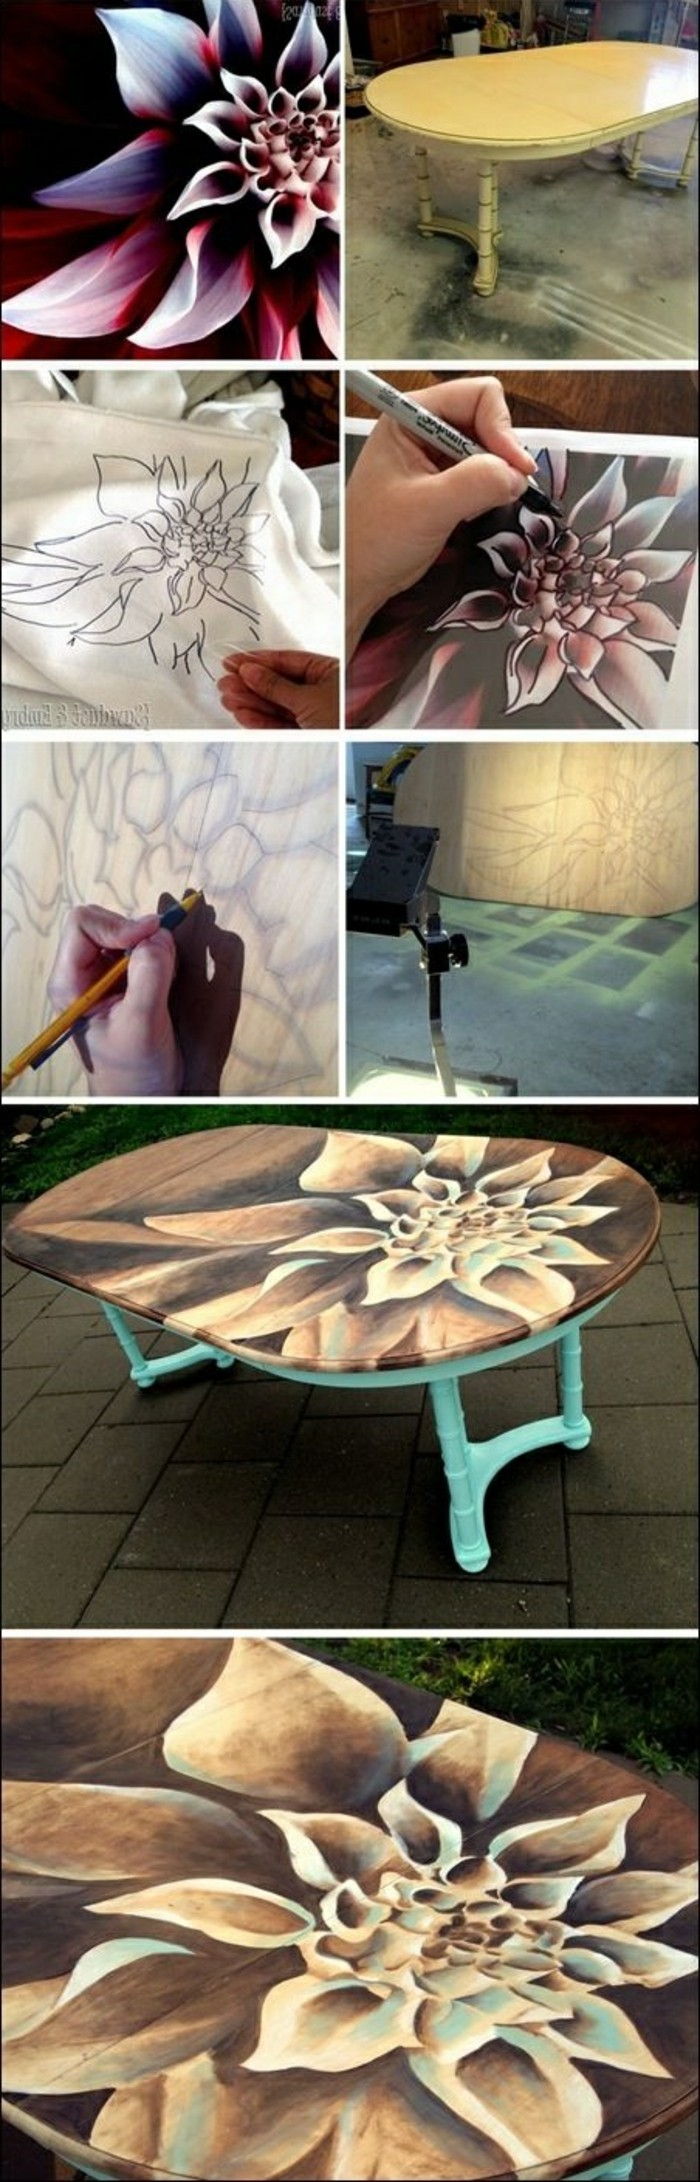 DIY-Moebel-creative-wohnideen-table-zdobienia z Flowers-